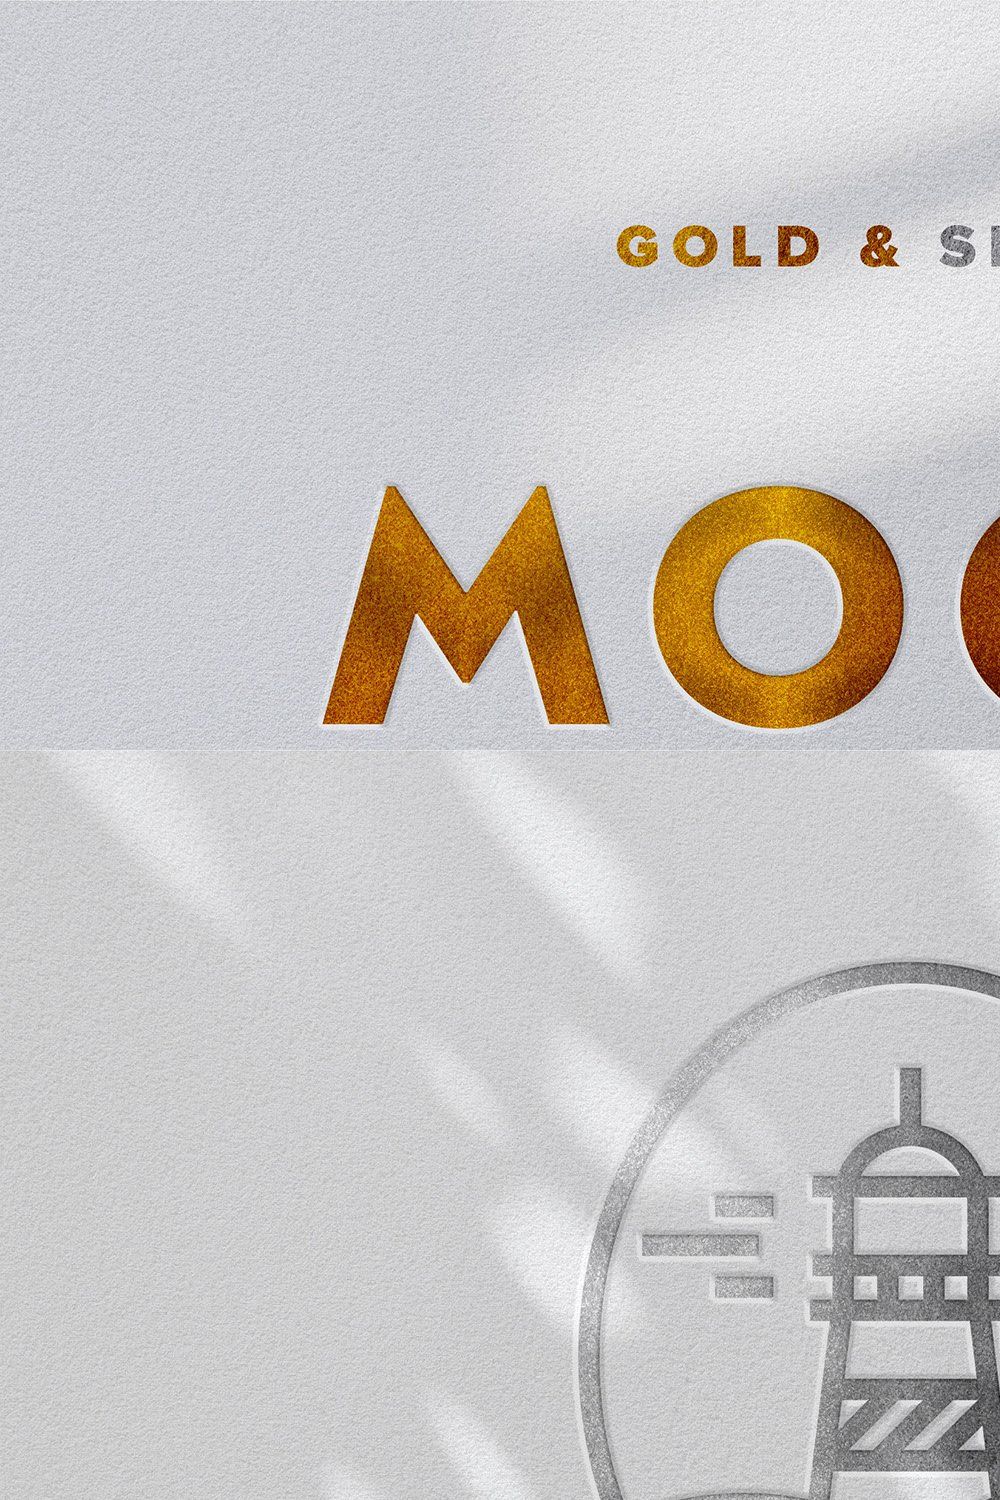 Gold & Silver Logo Mockup pinterest preview image.